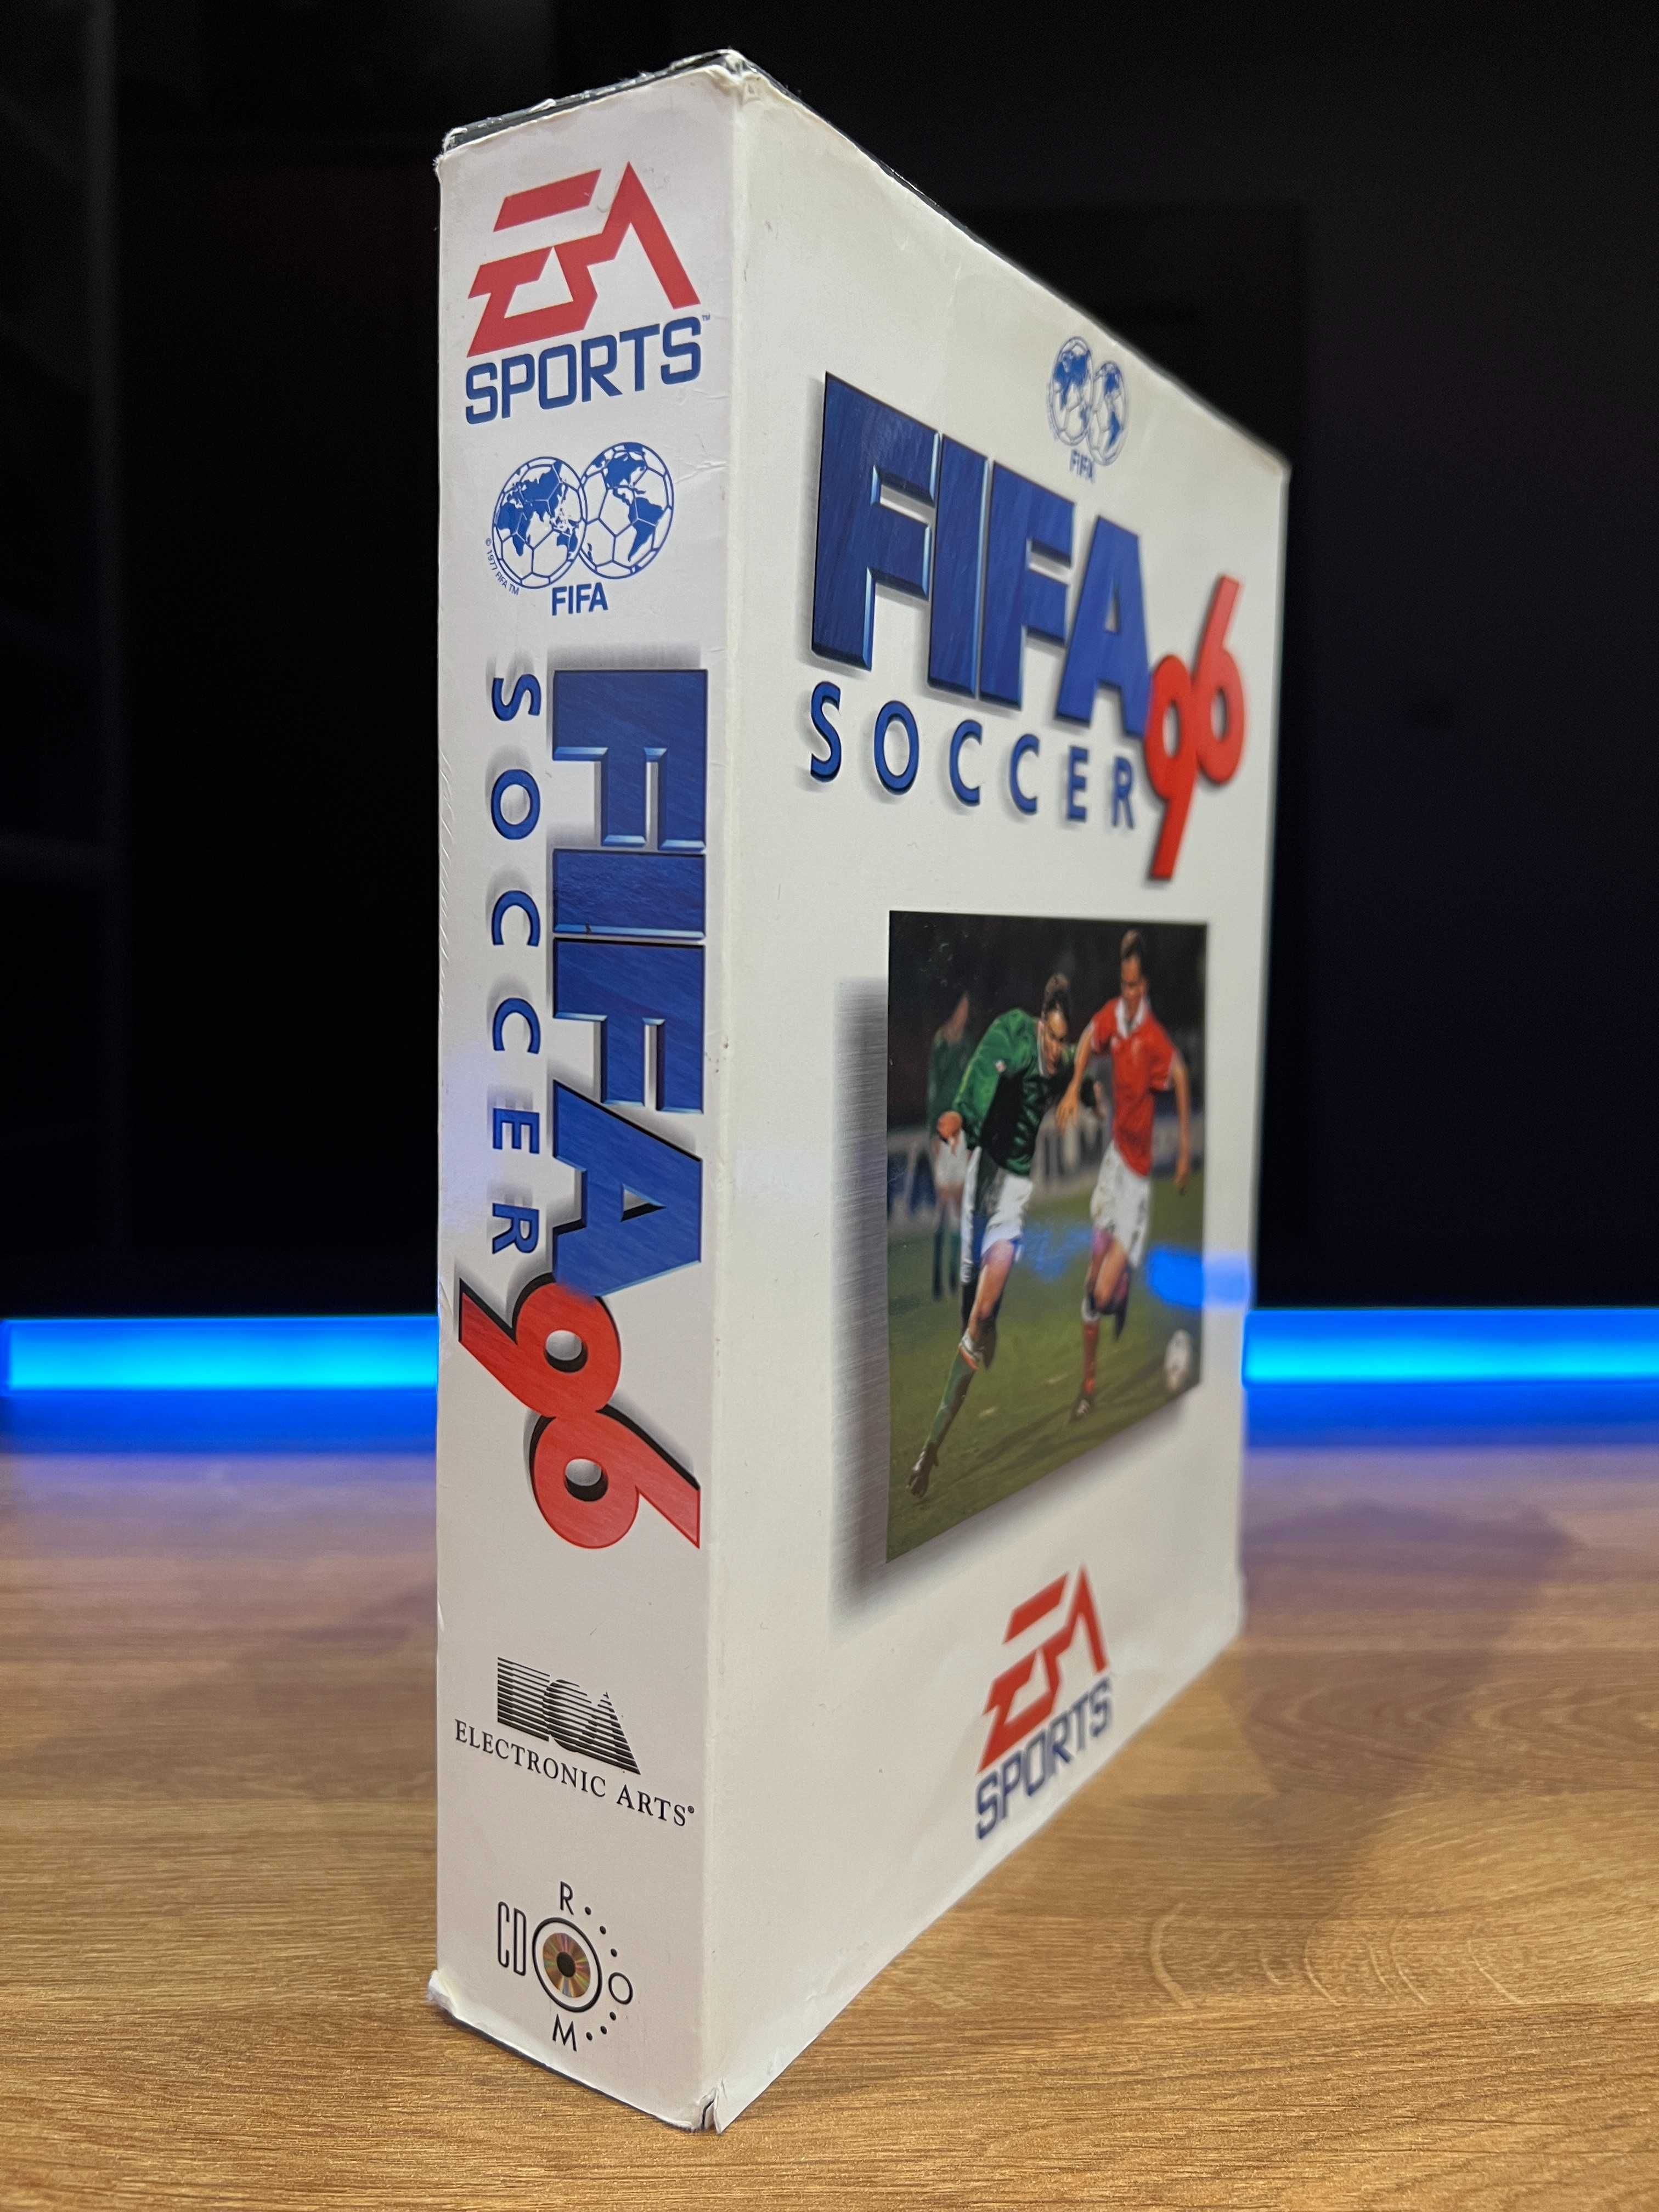 FIFA SOCCER 96 gra (PC EN 1995) BIG BOX premierowe kompletne wydanie